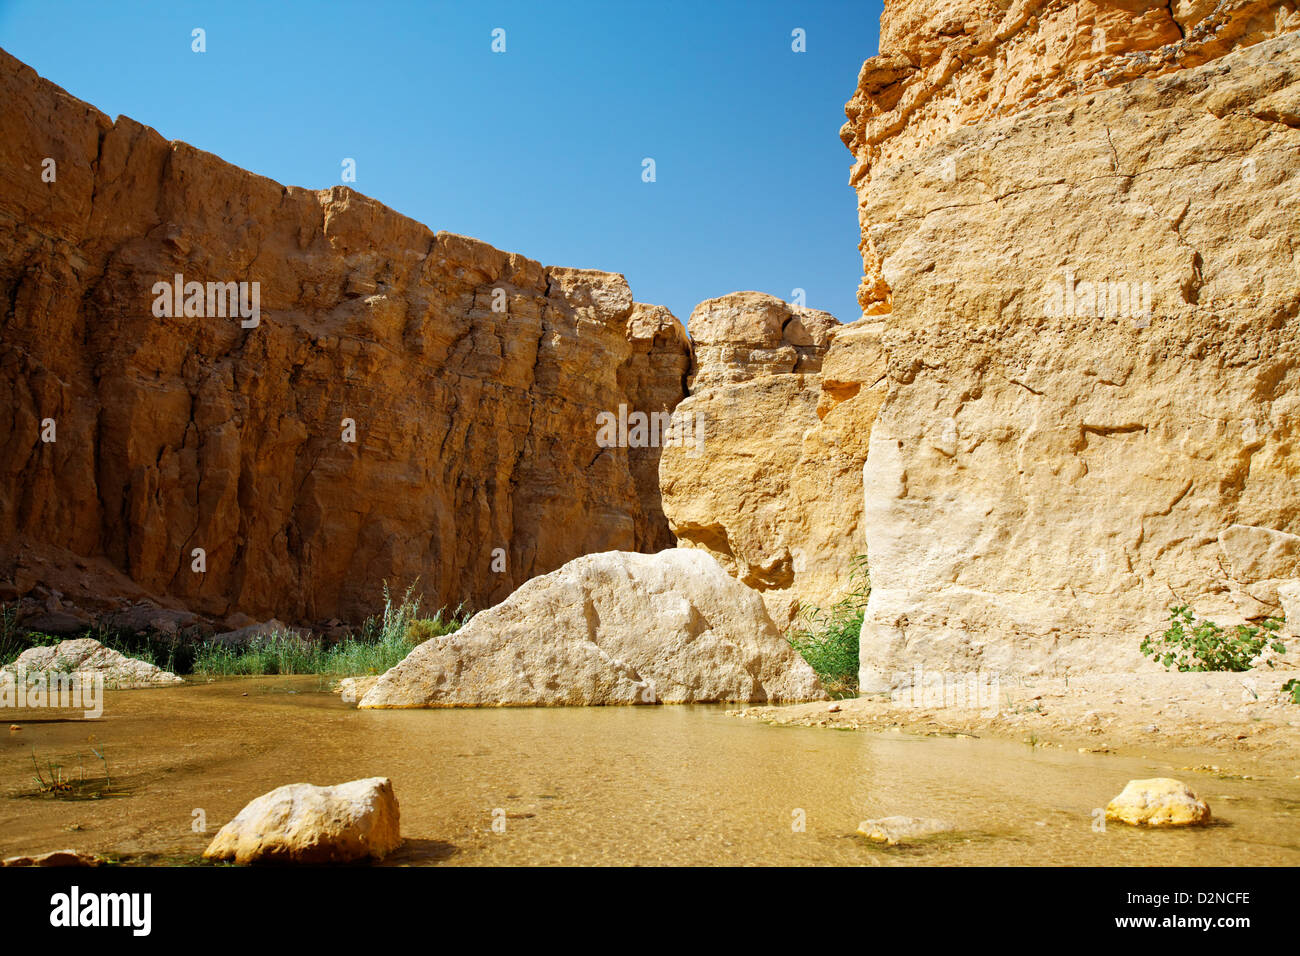 Mountain oasis Tamerza in Tunisia near the border with Algeria. Stock Photo